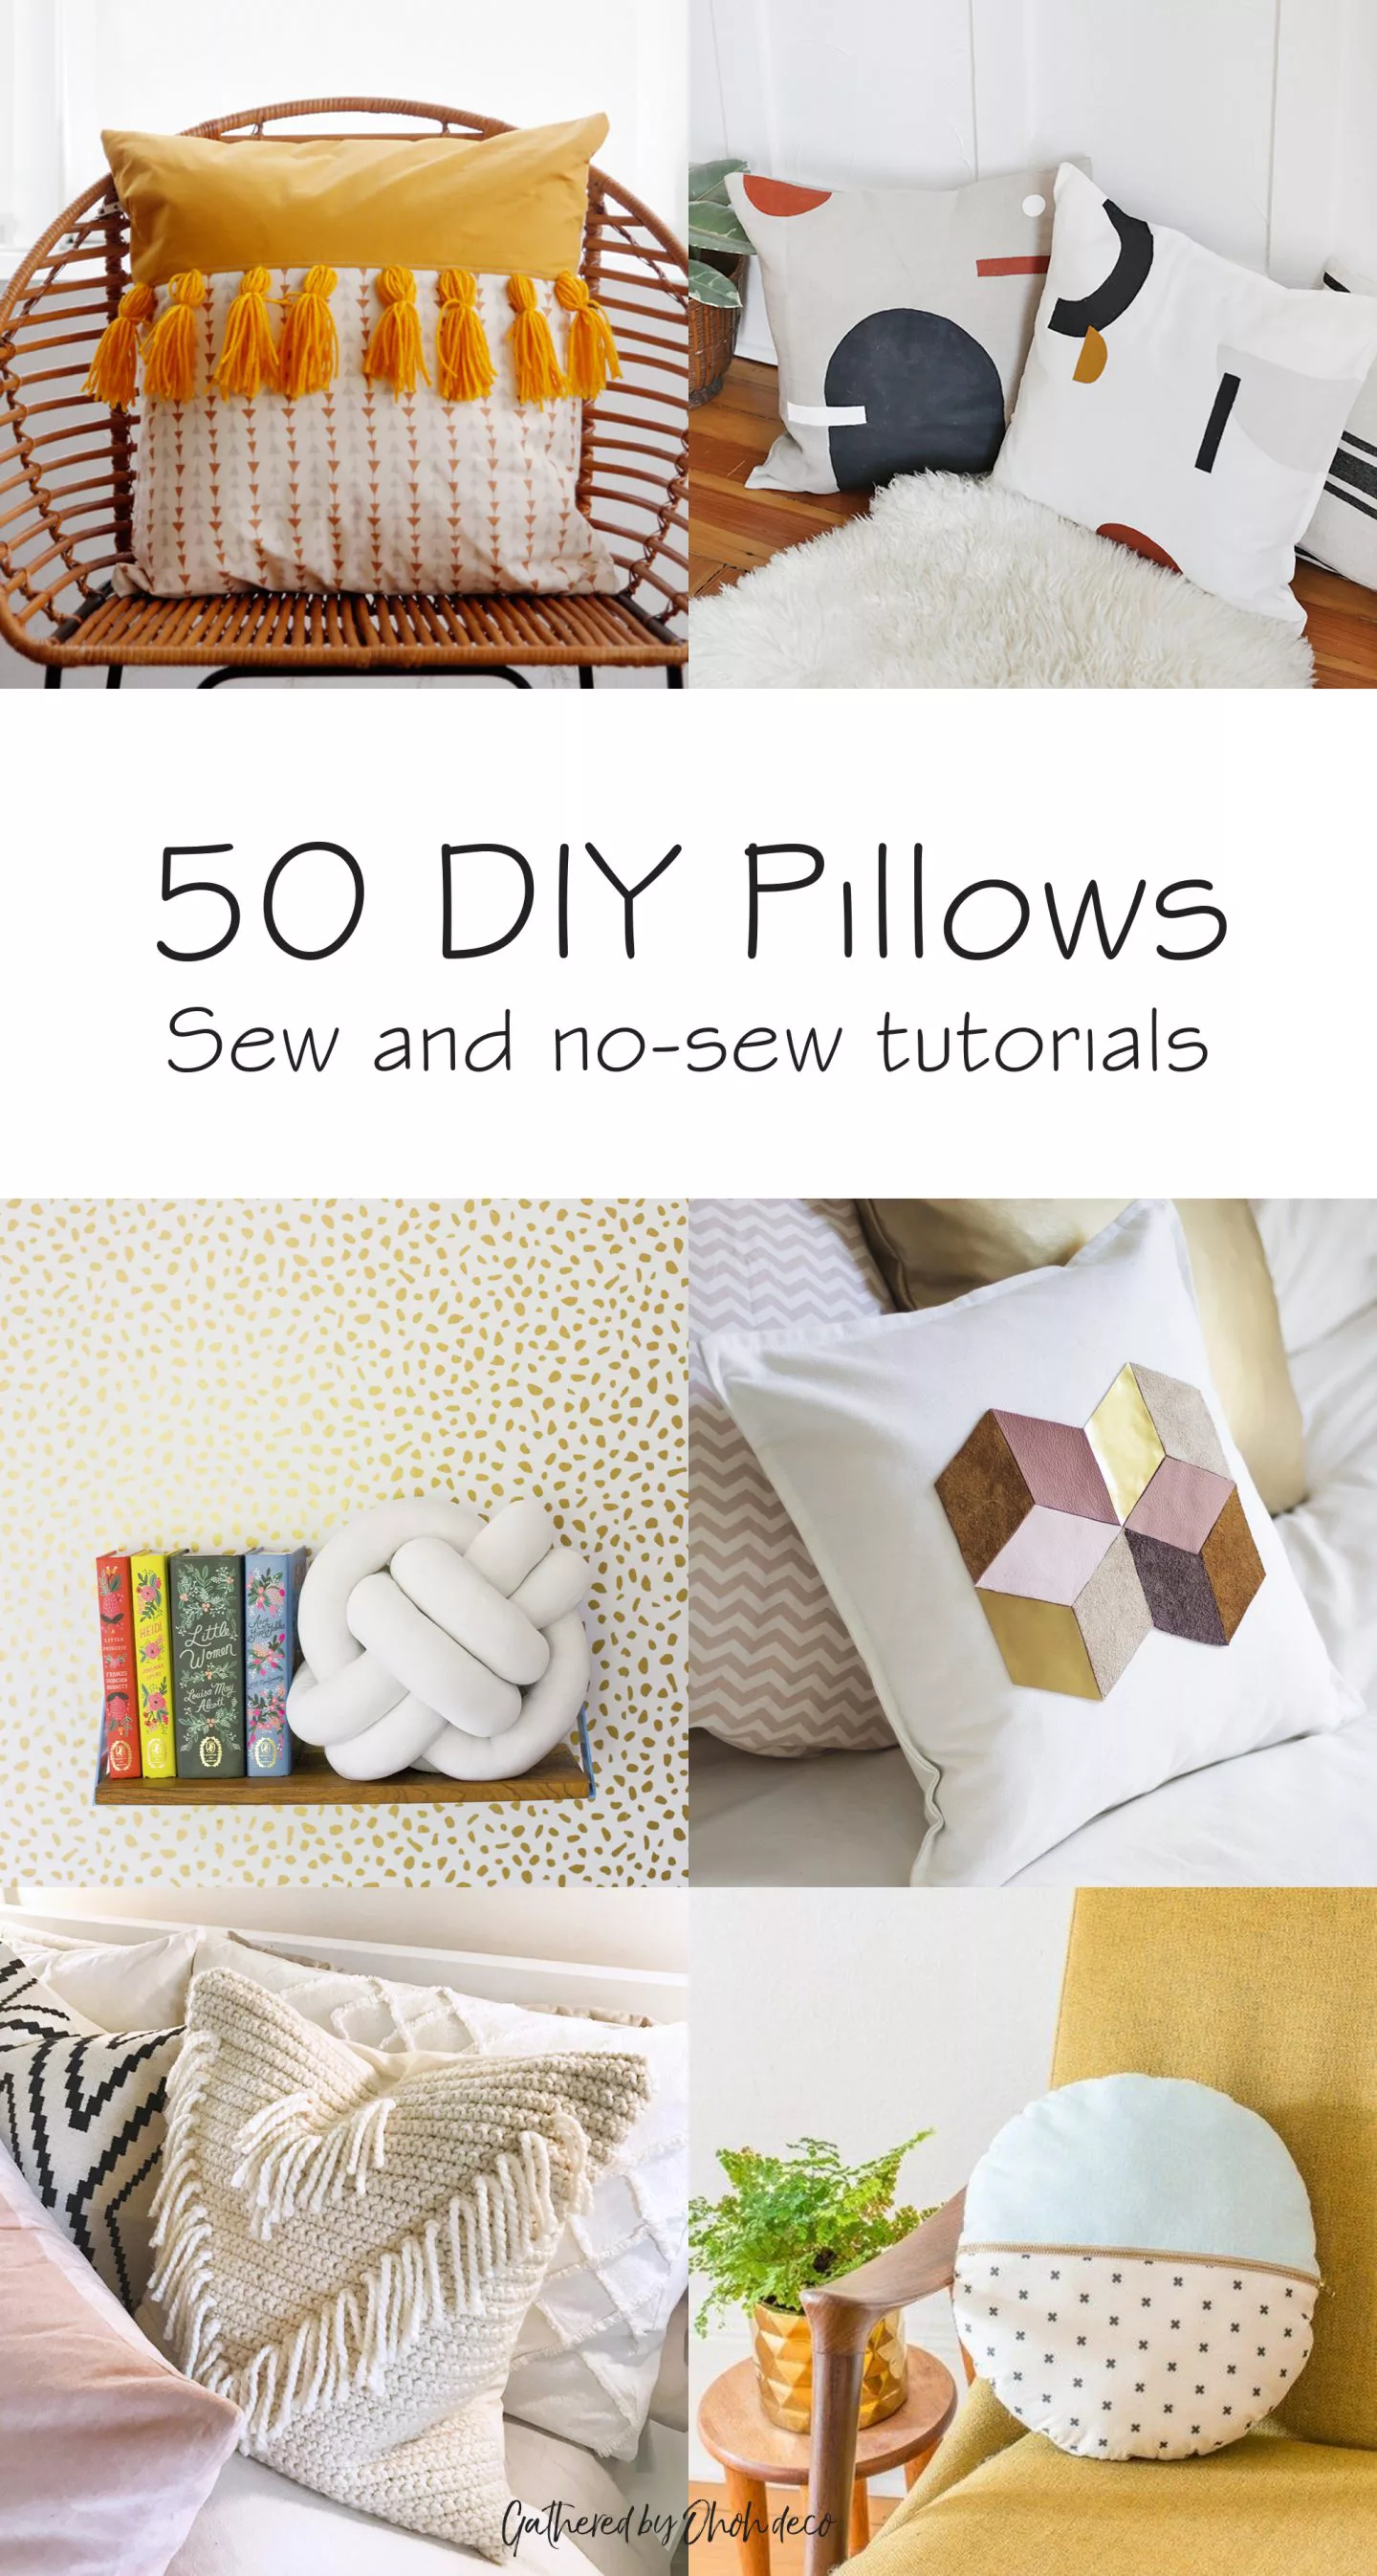 50 DIY pillows - sewing tutorial and no-sew 